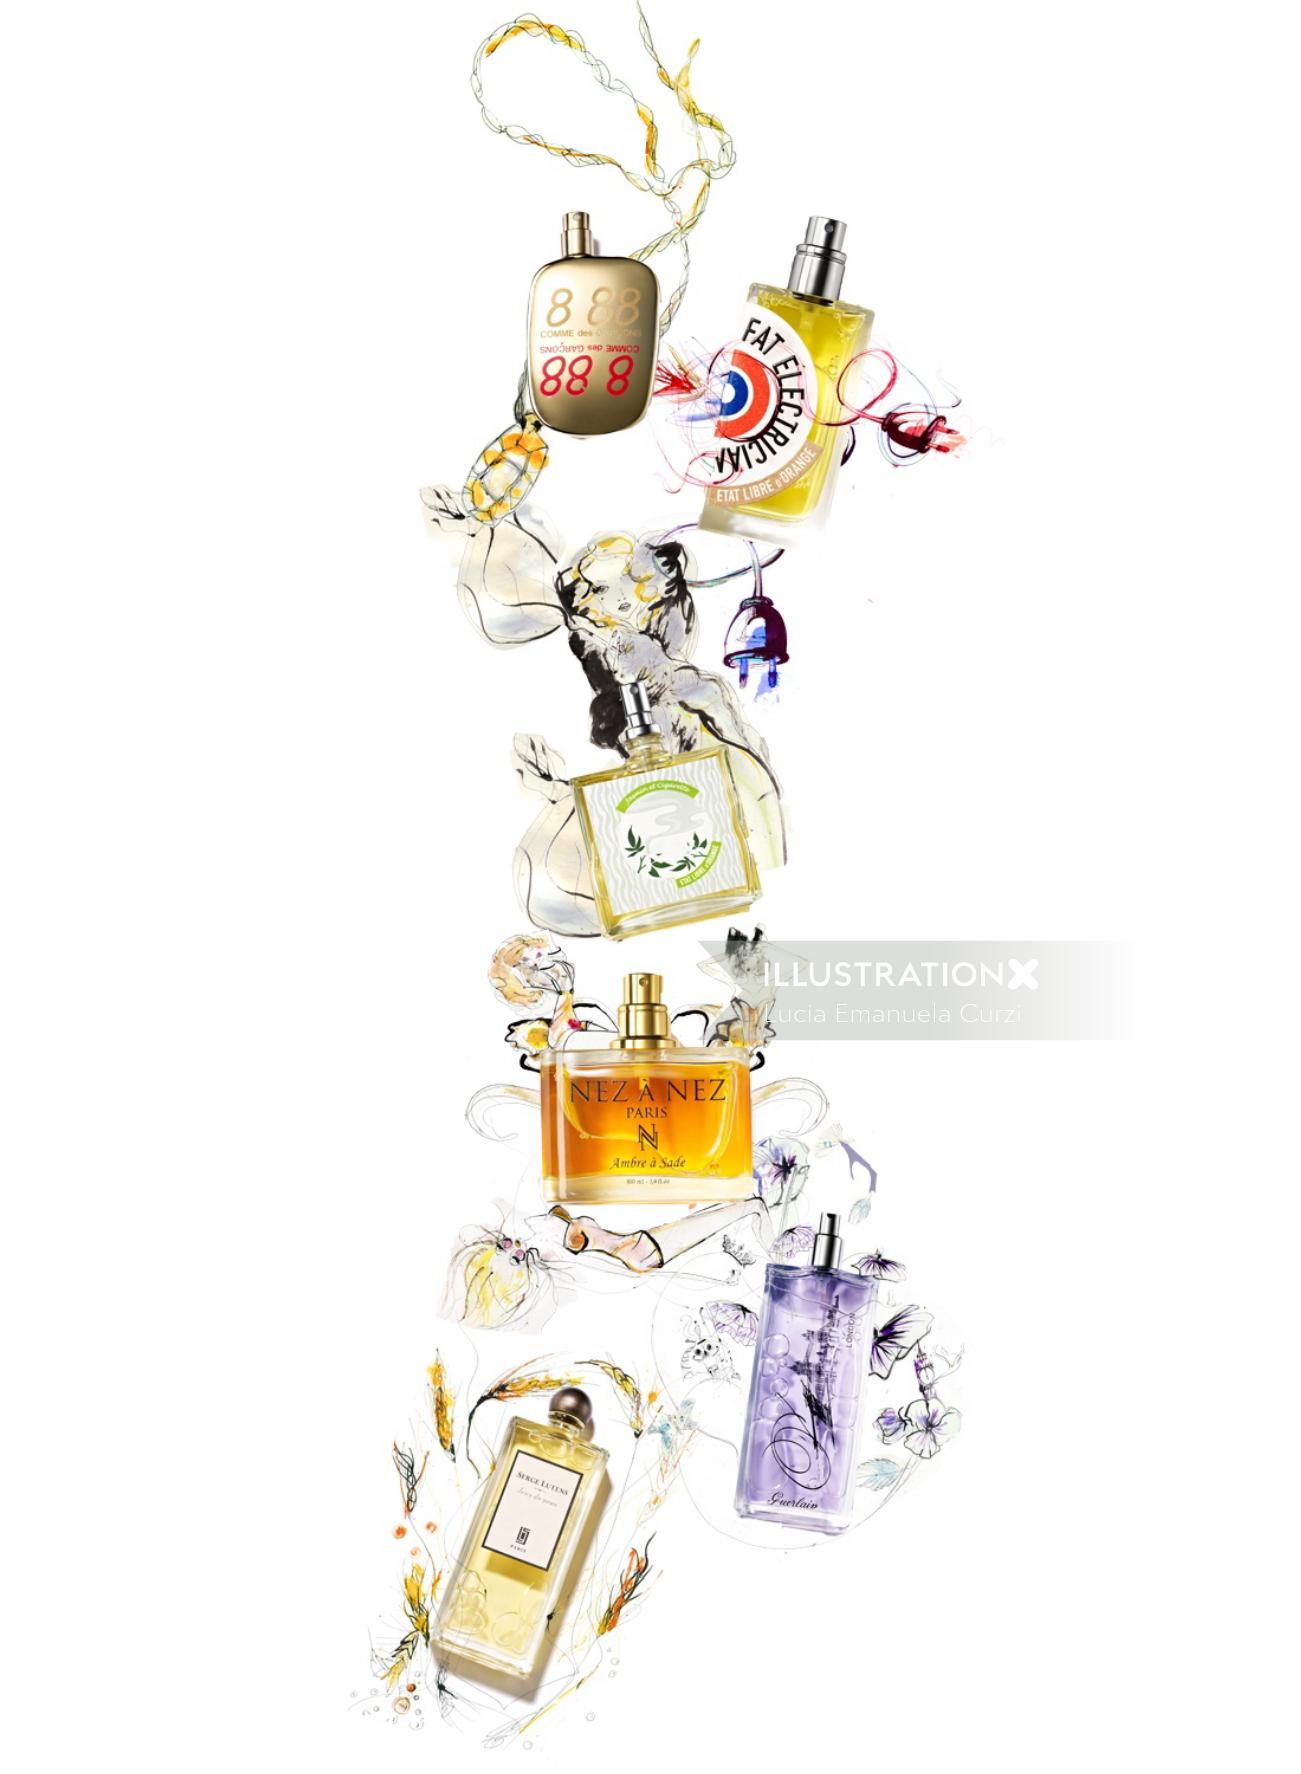 Fragrance botlle illustration by Lucia Emanuela Curzi